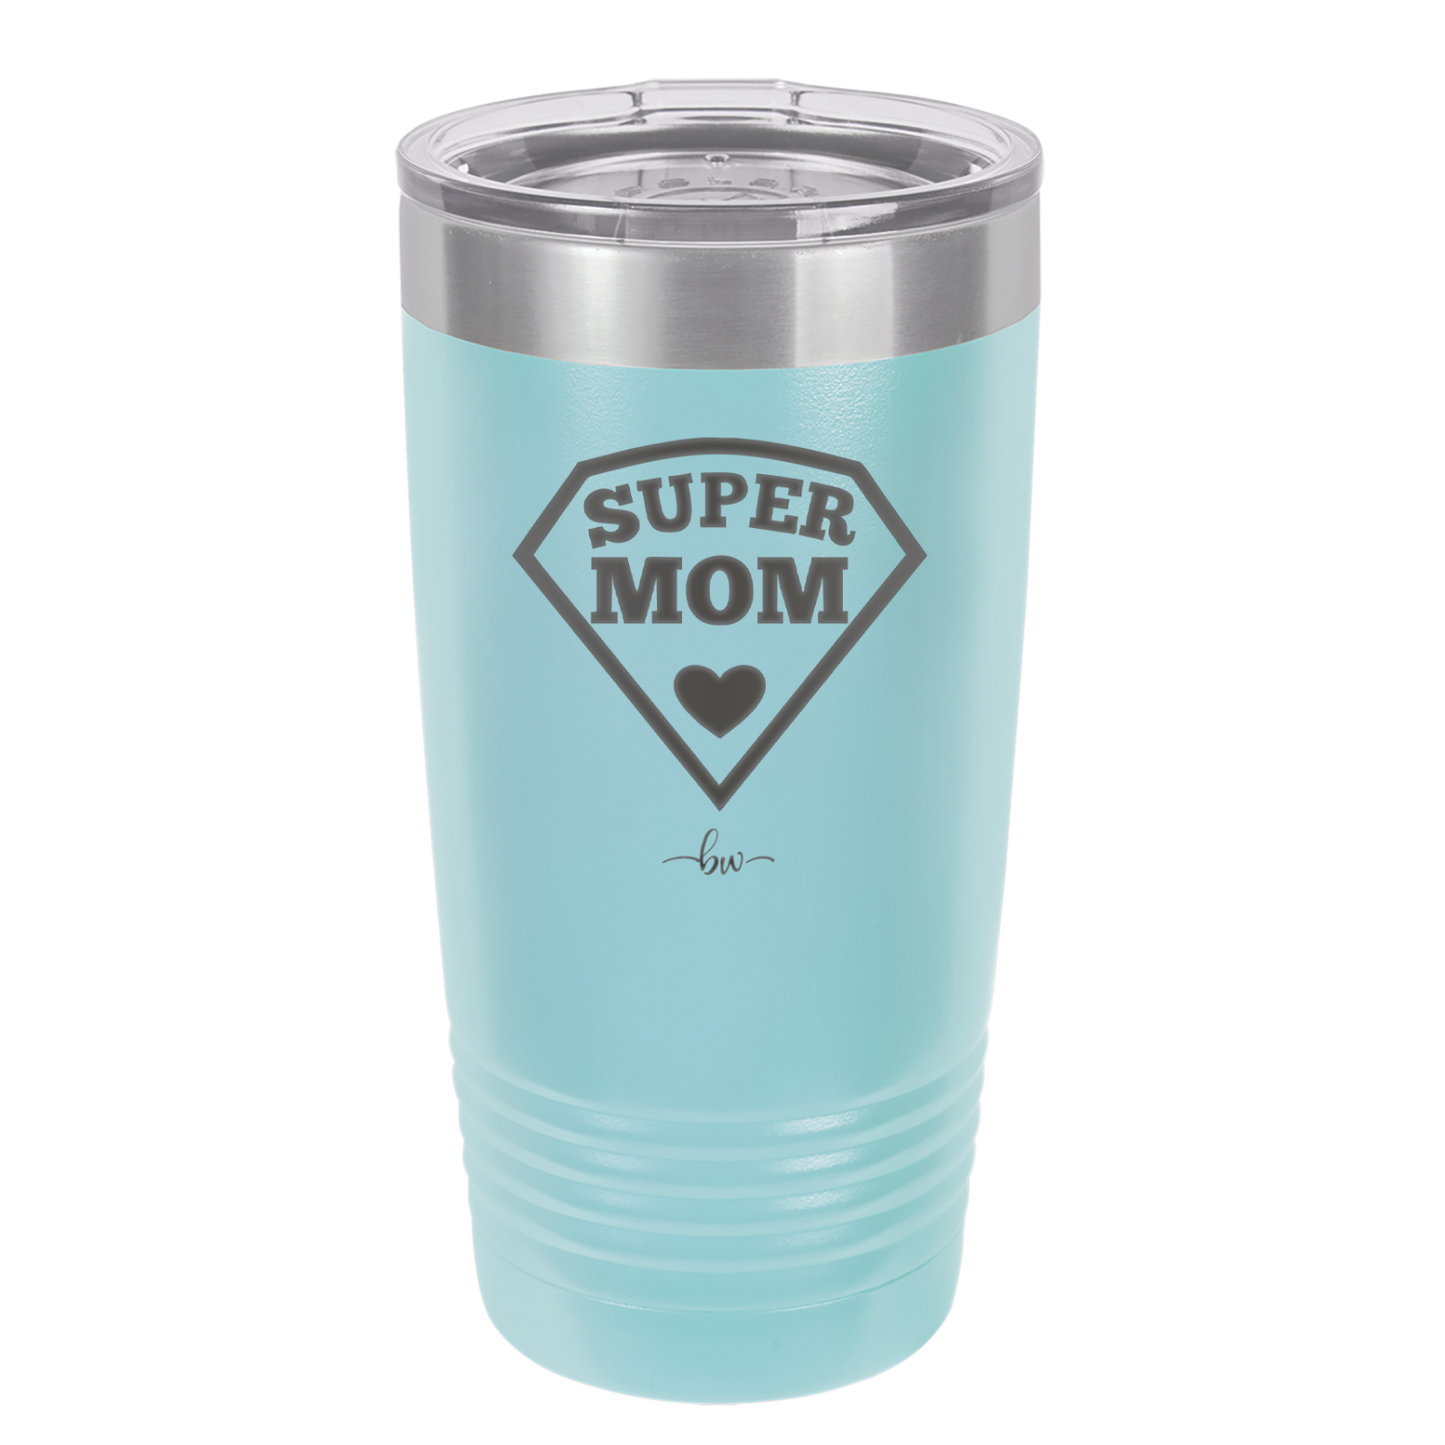 Super Mom - Laser Engraved Stainless Steel Drinkware - 2012 -